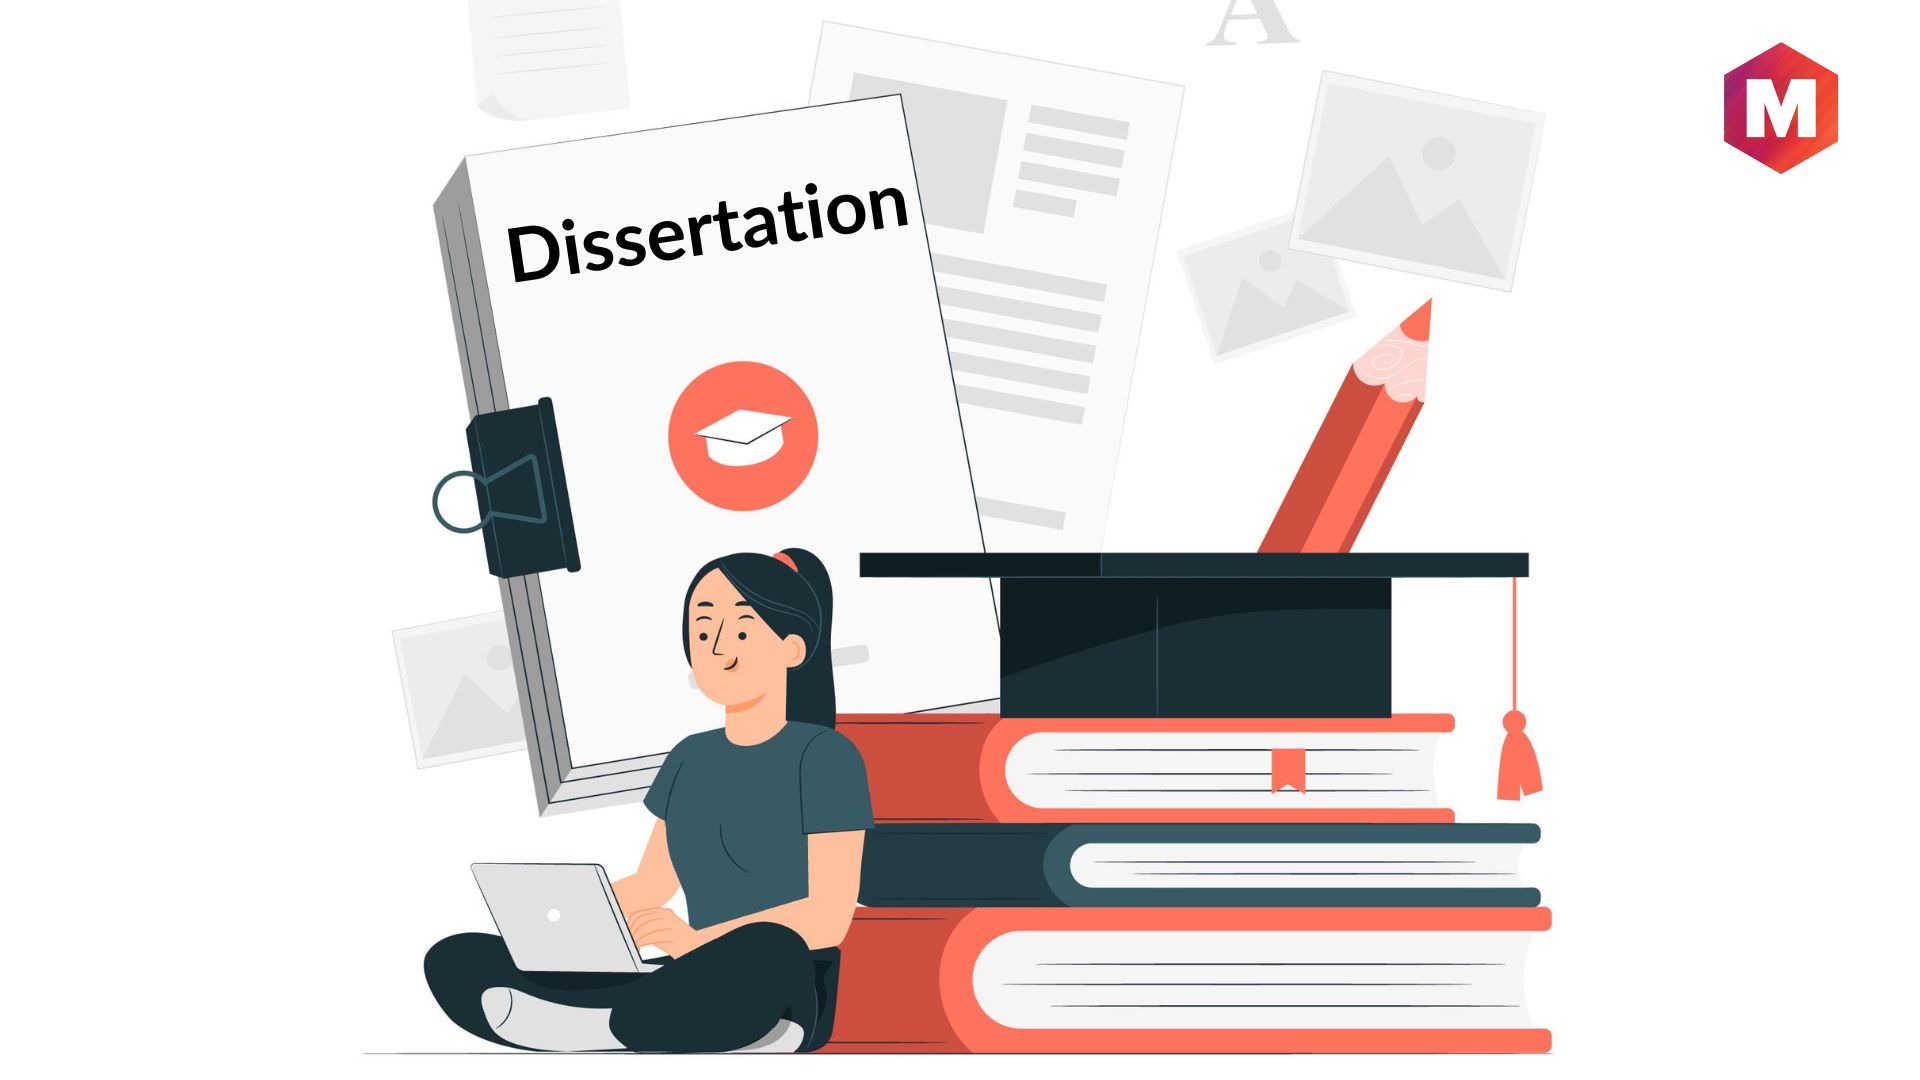 definition mot dissertation